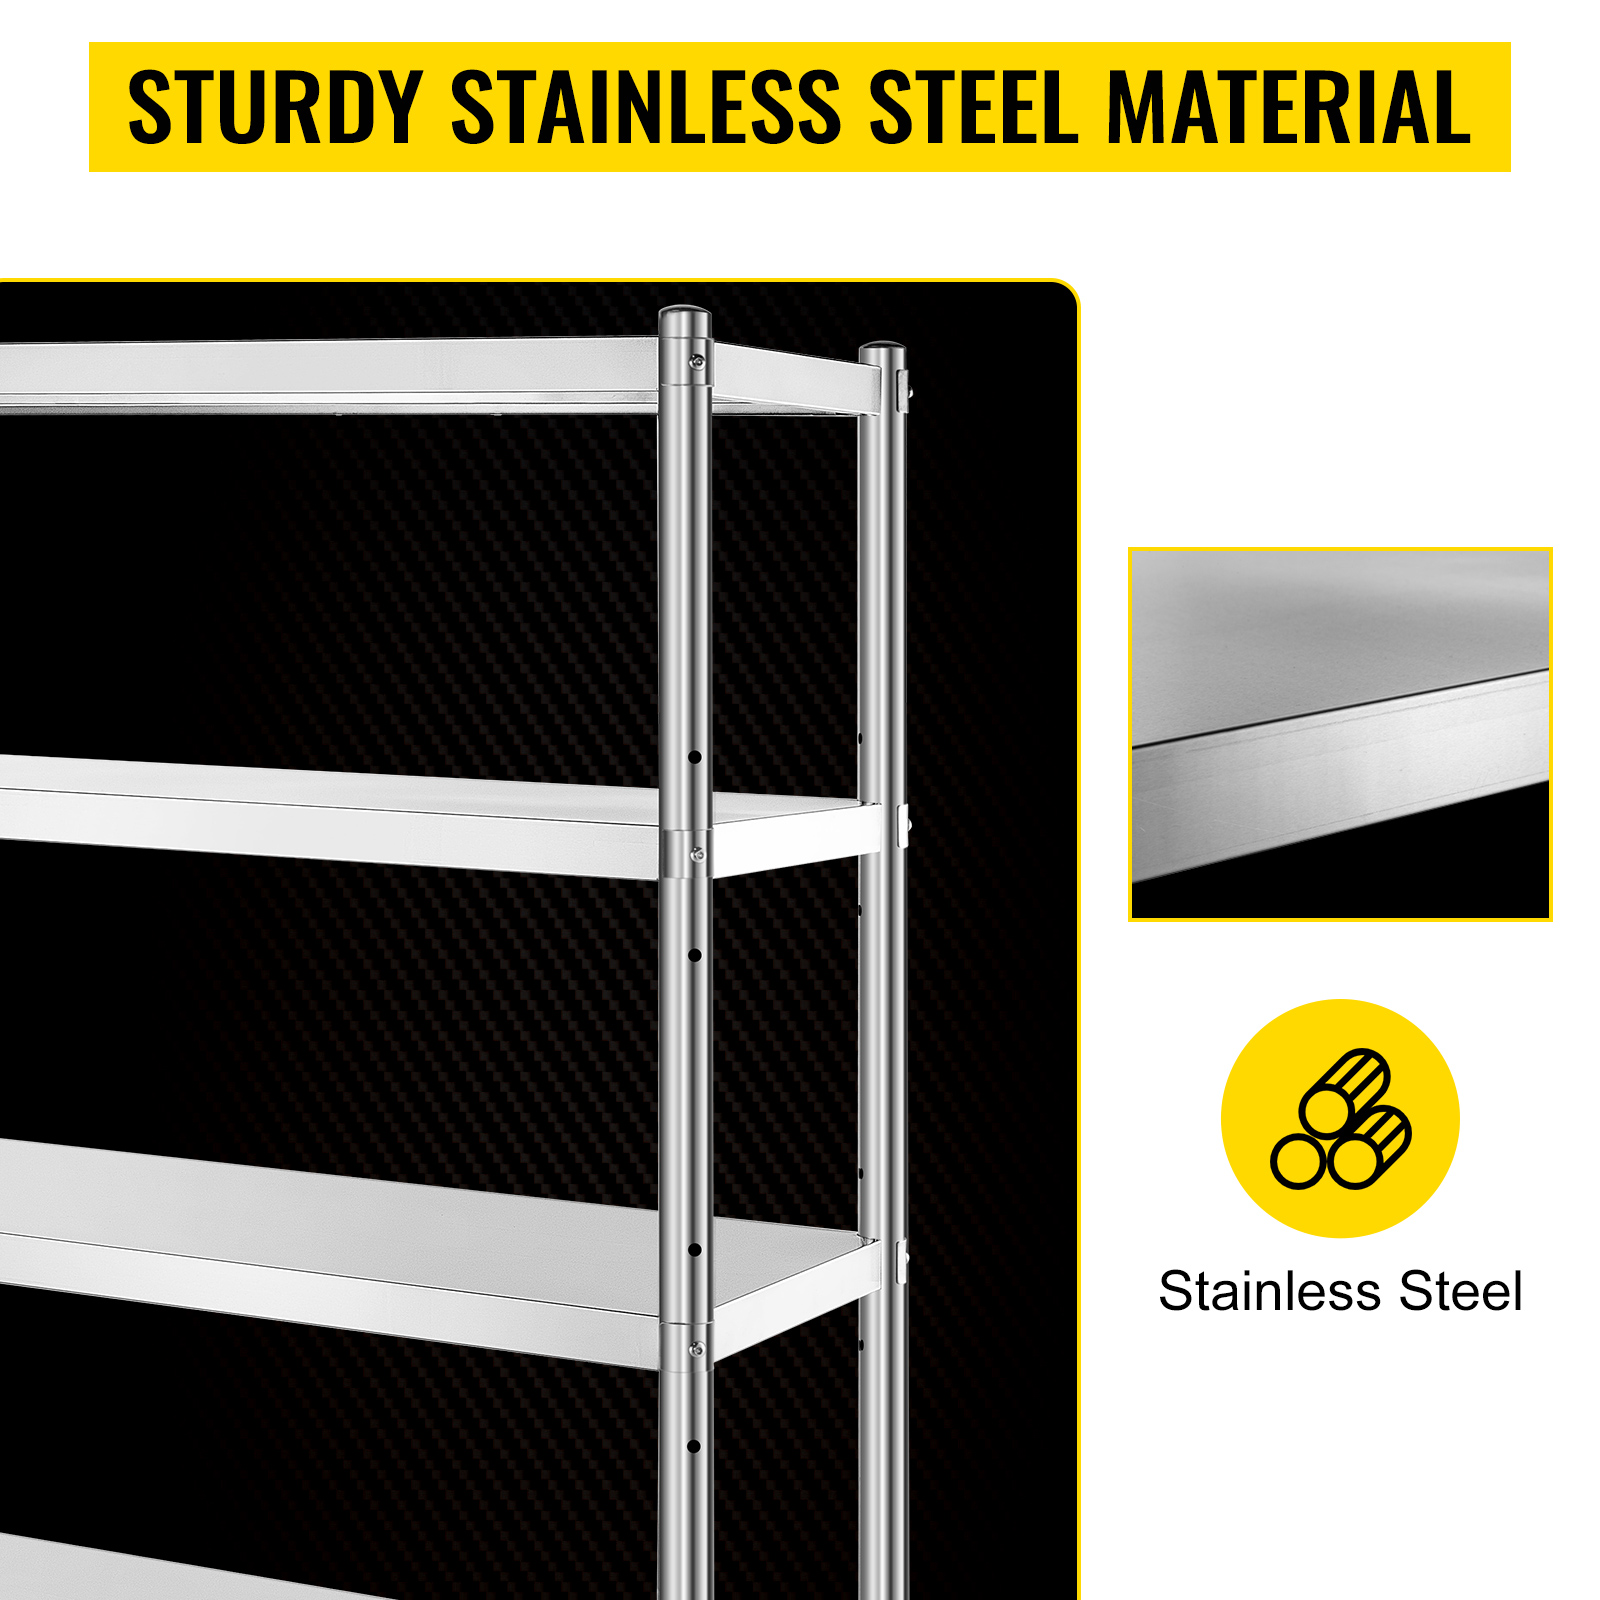 VEVOR Storage Shelf, 5-Tier Storage Shelving Unit, Stainless Steel Garage Shelf, 70.9 x 17.7 x 70.9 inch Heavy Duty Storage Shelving, 1650 lbs Total